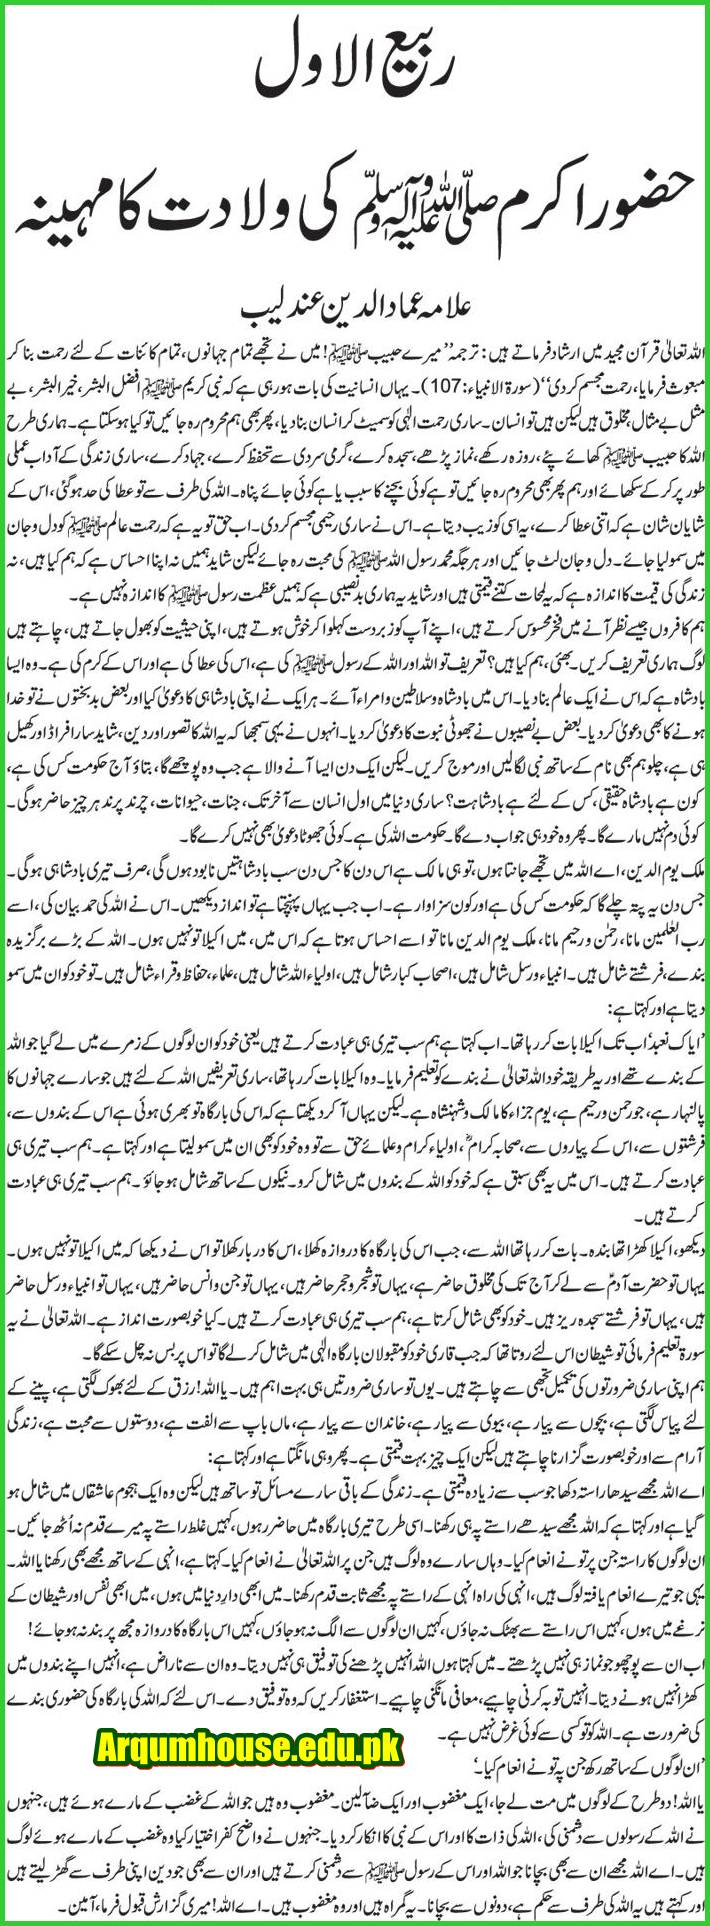 Urdu & English Essay on Eid Milad ul Nabi in Pakistan